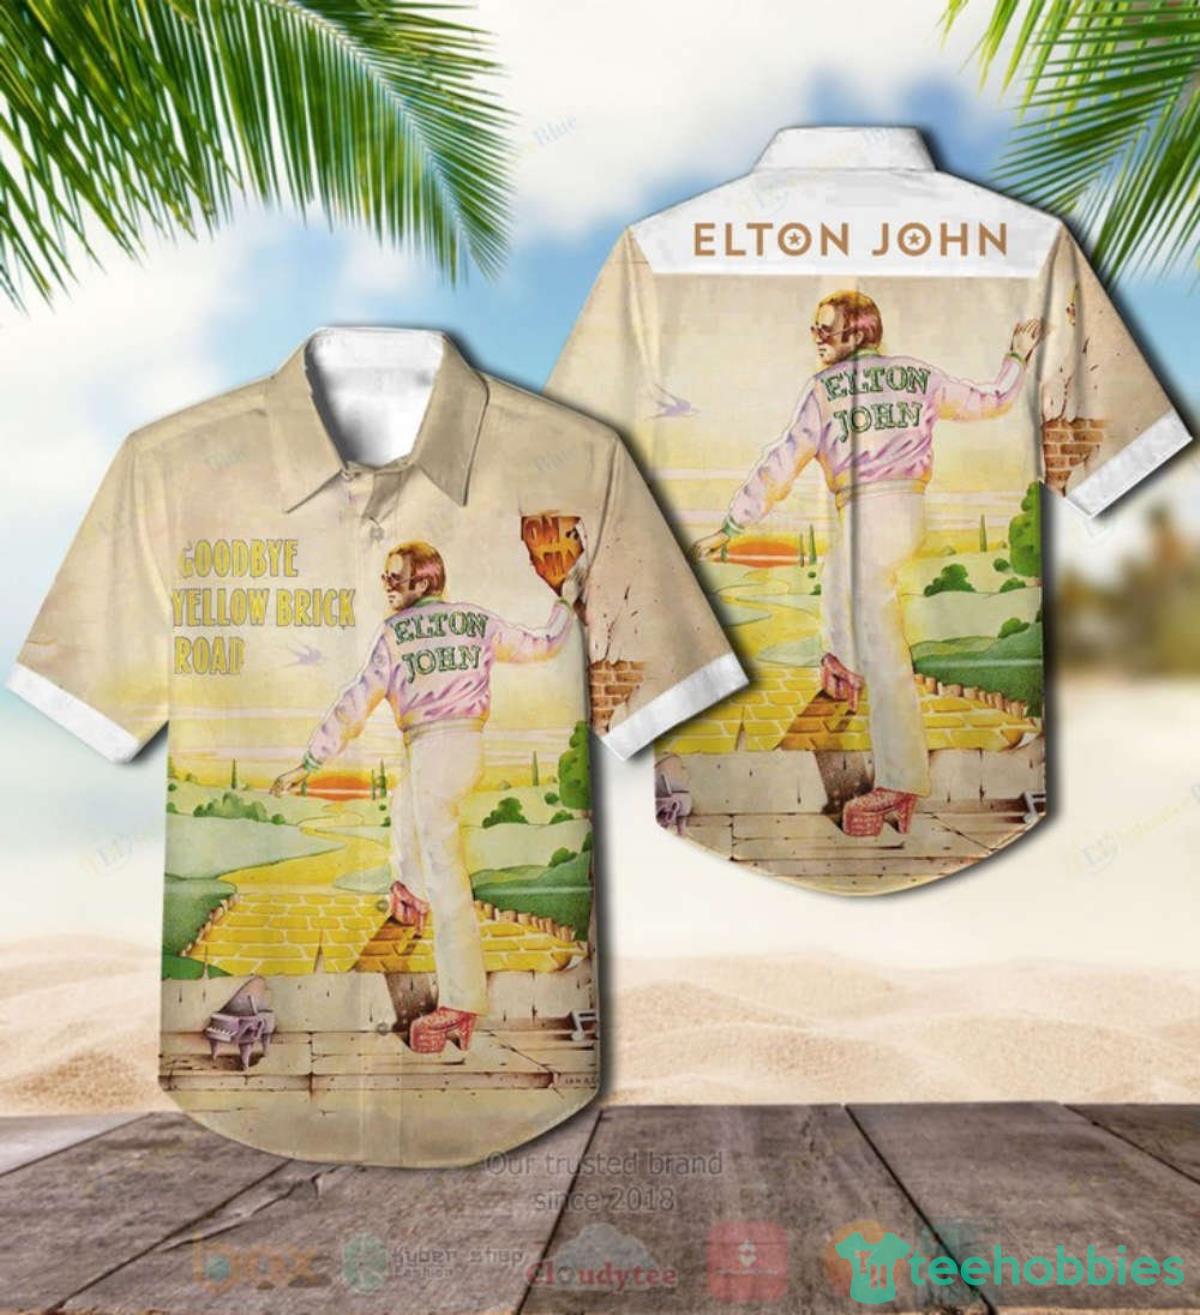 Elton John - Goodbye Yellow Brick Road CD